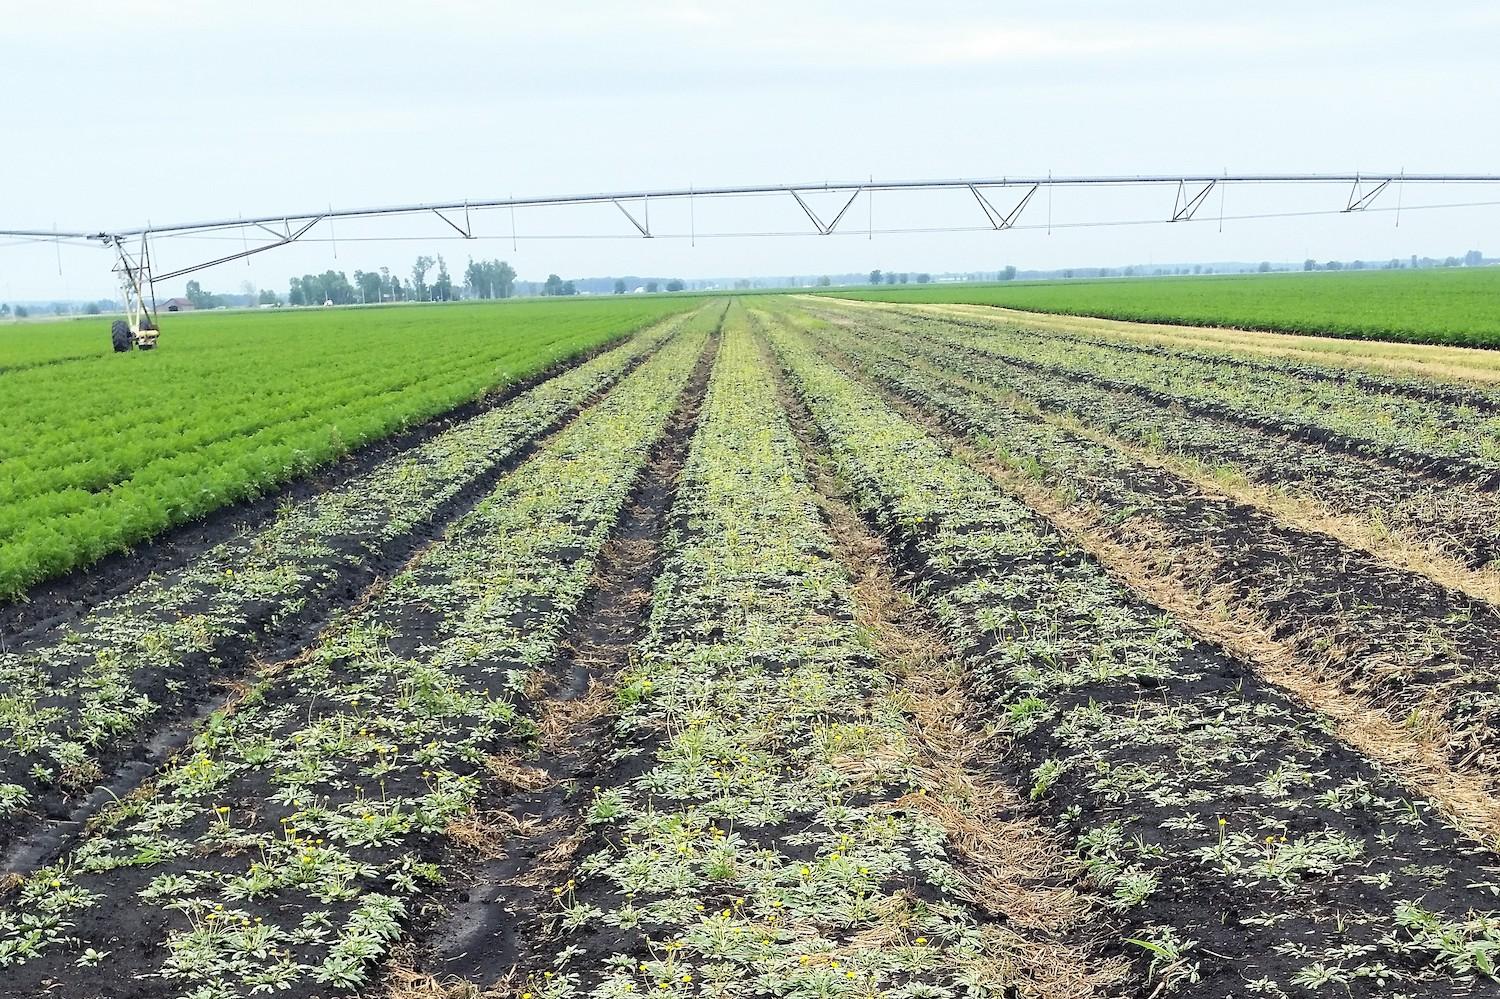 Bioeconomy - farm growing dandelions for rubber